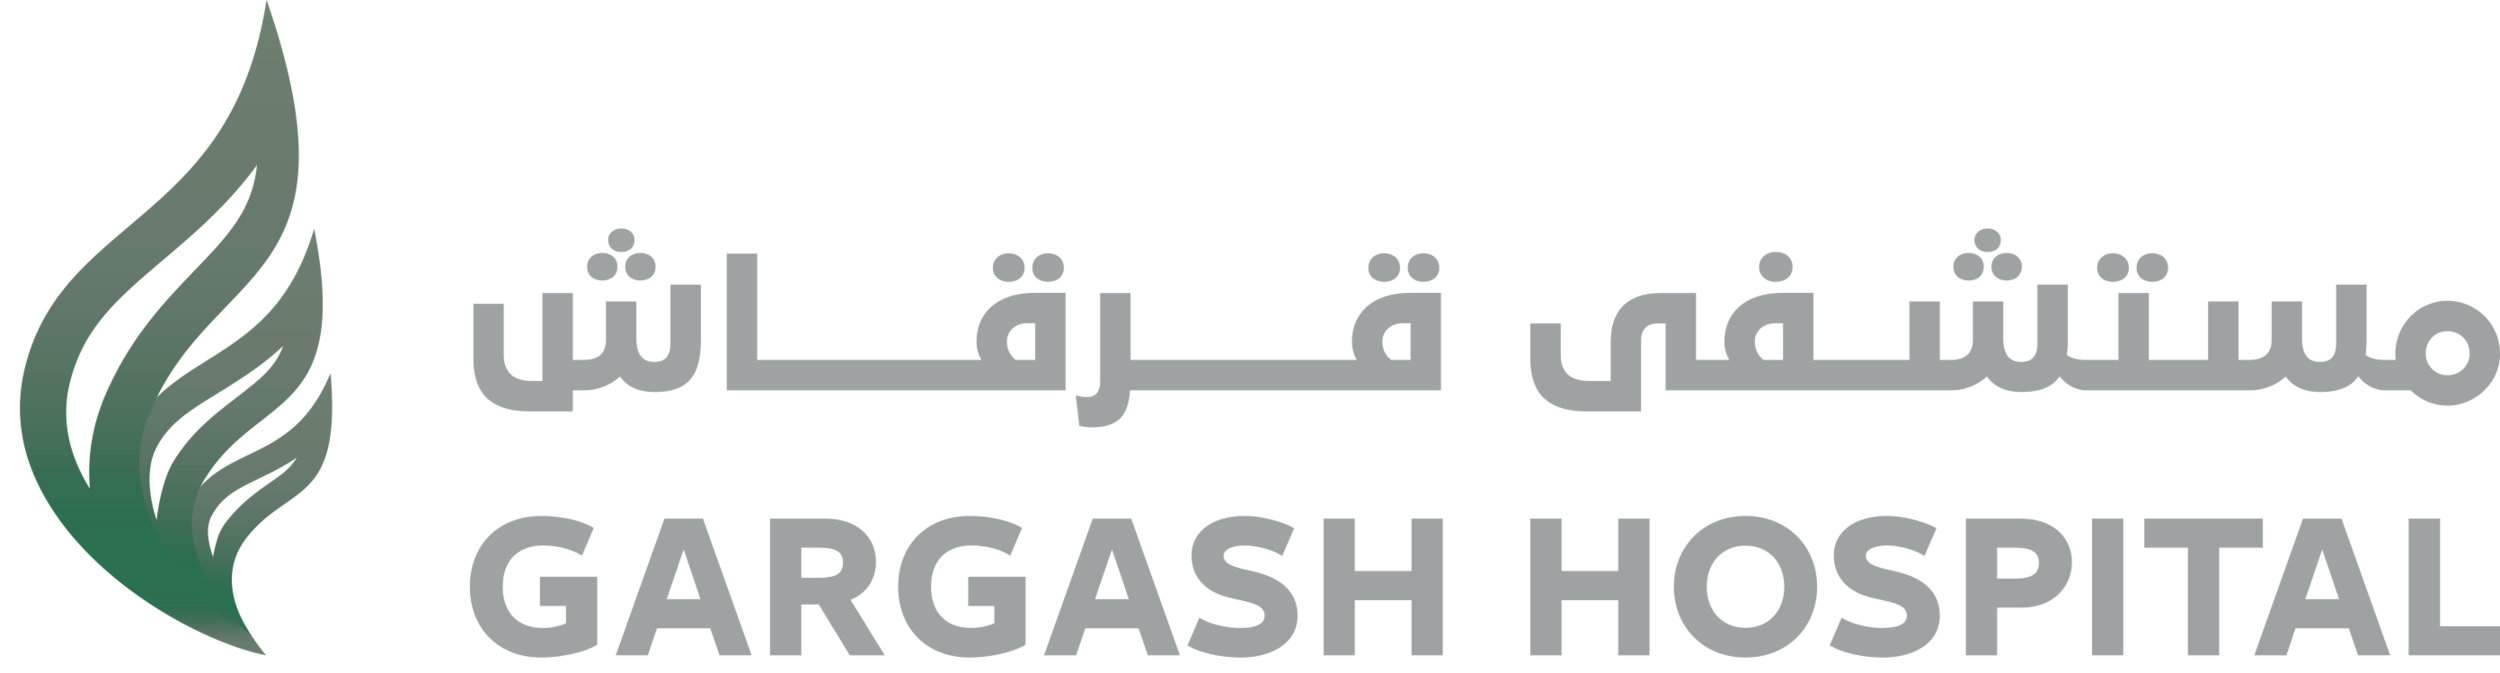 Gargash Hospital logo.png